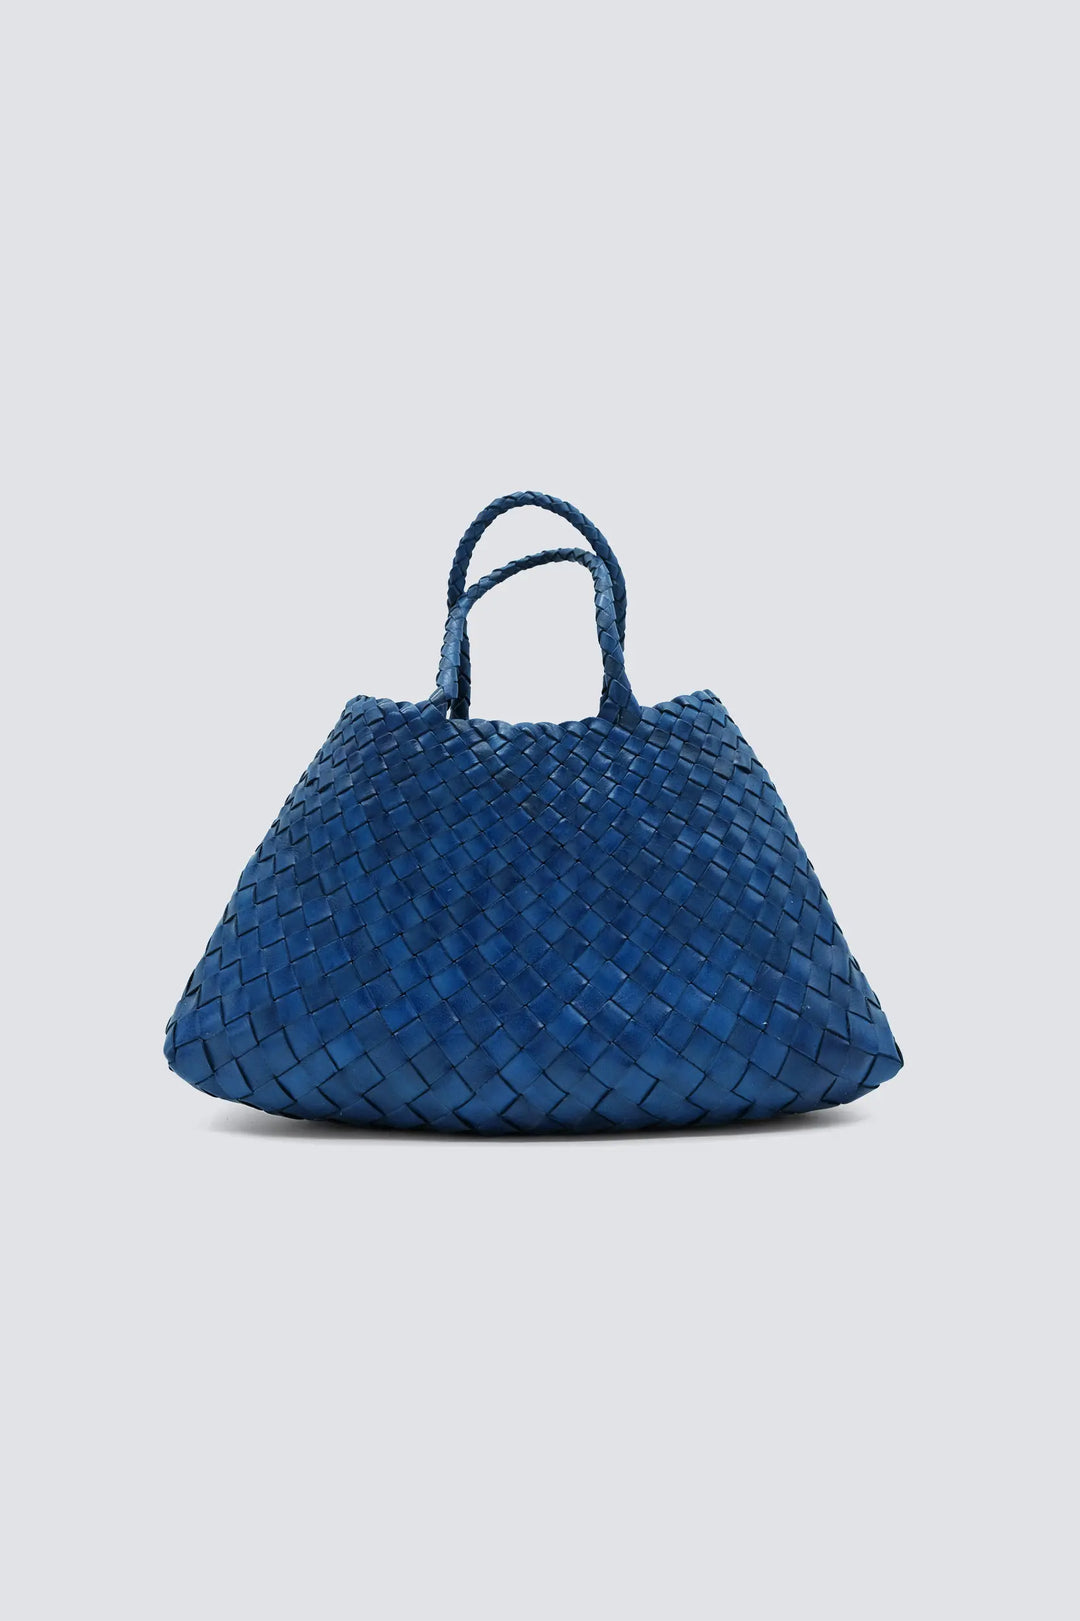 Dragon Diffusion - Woven Leather Bag Handmade - Santa Croce Small Steel Blue